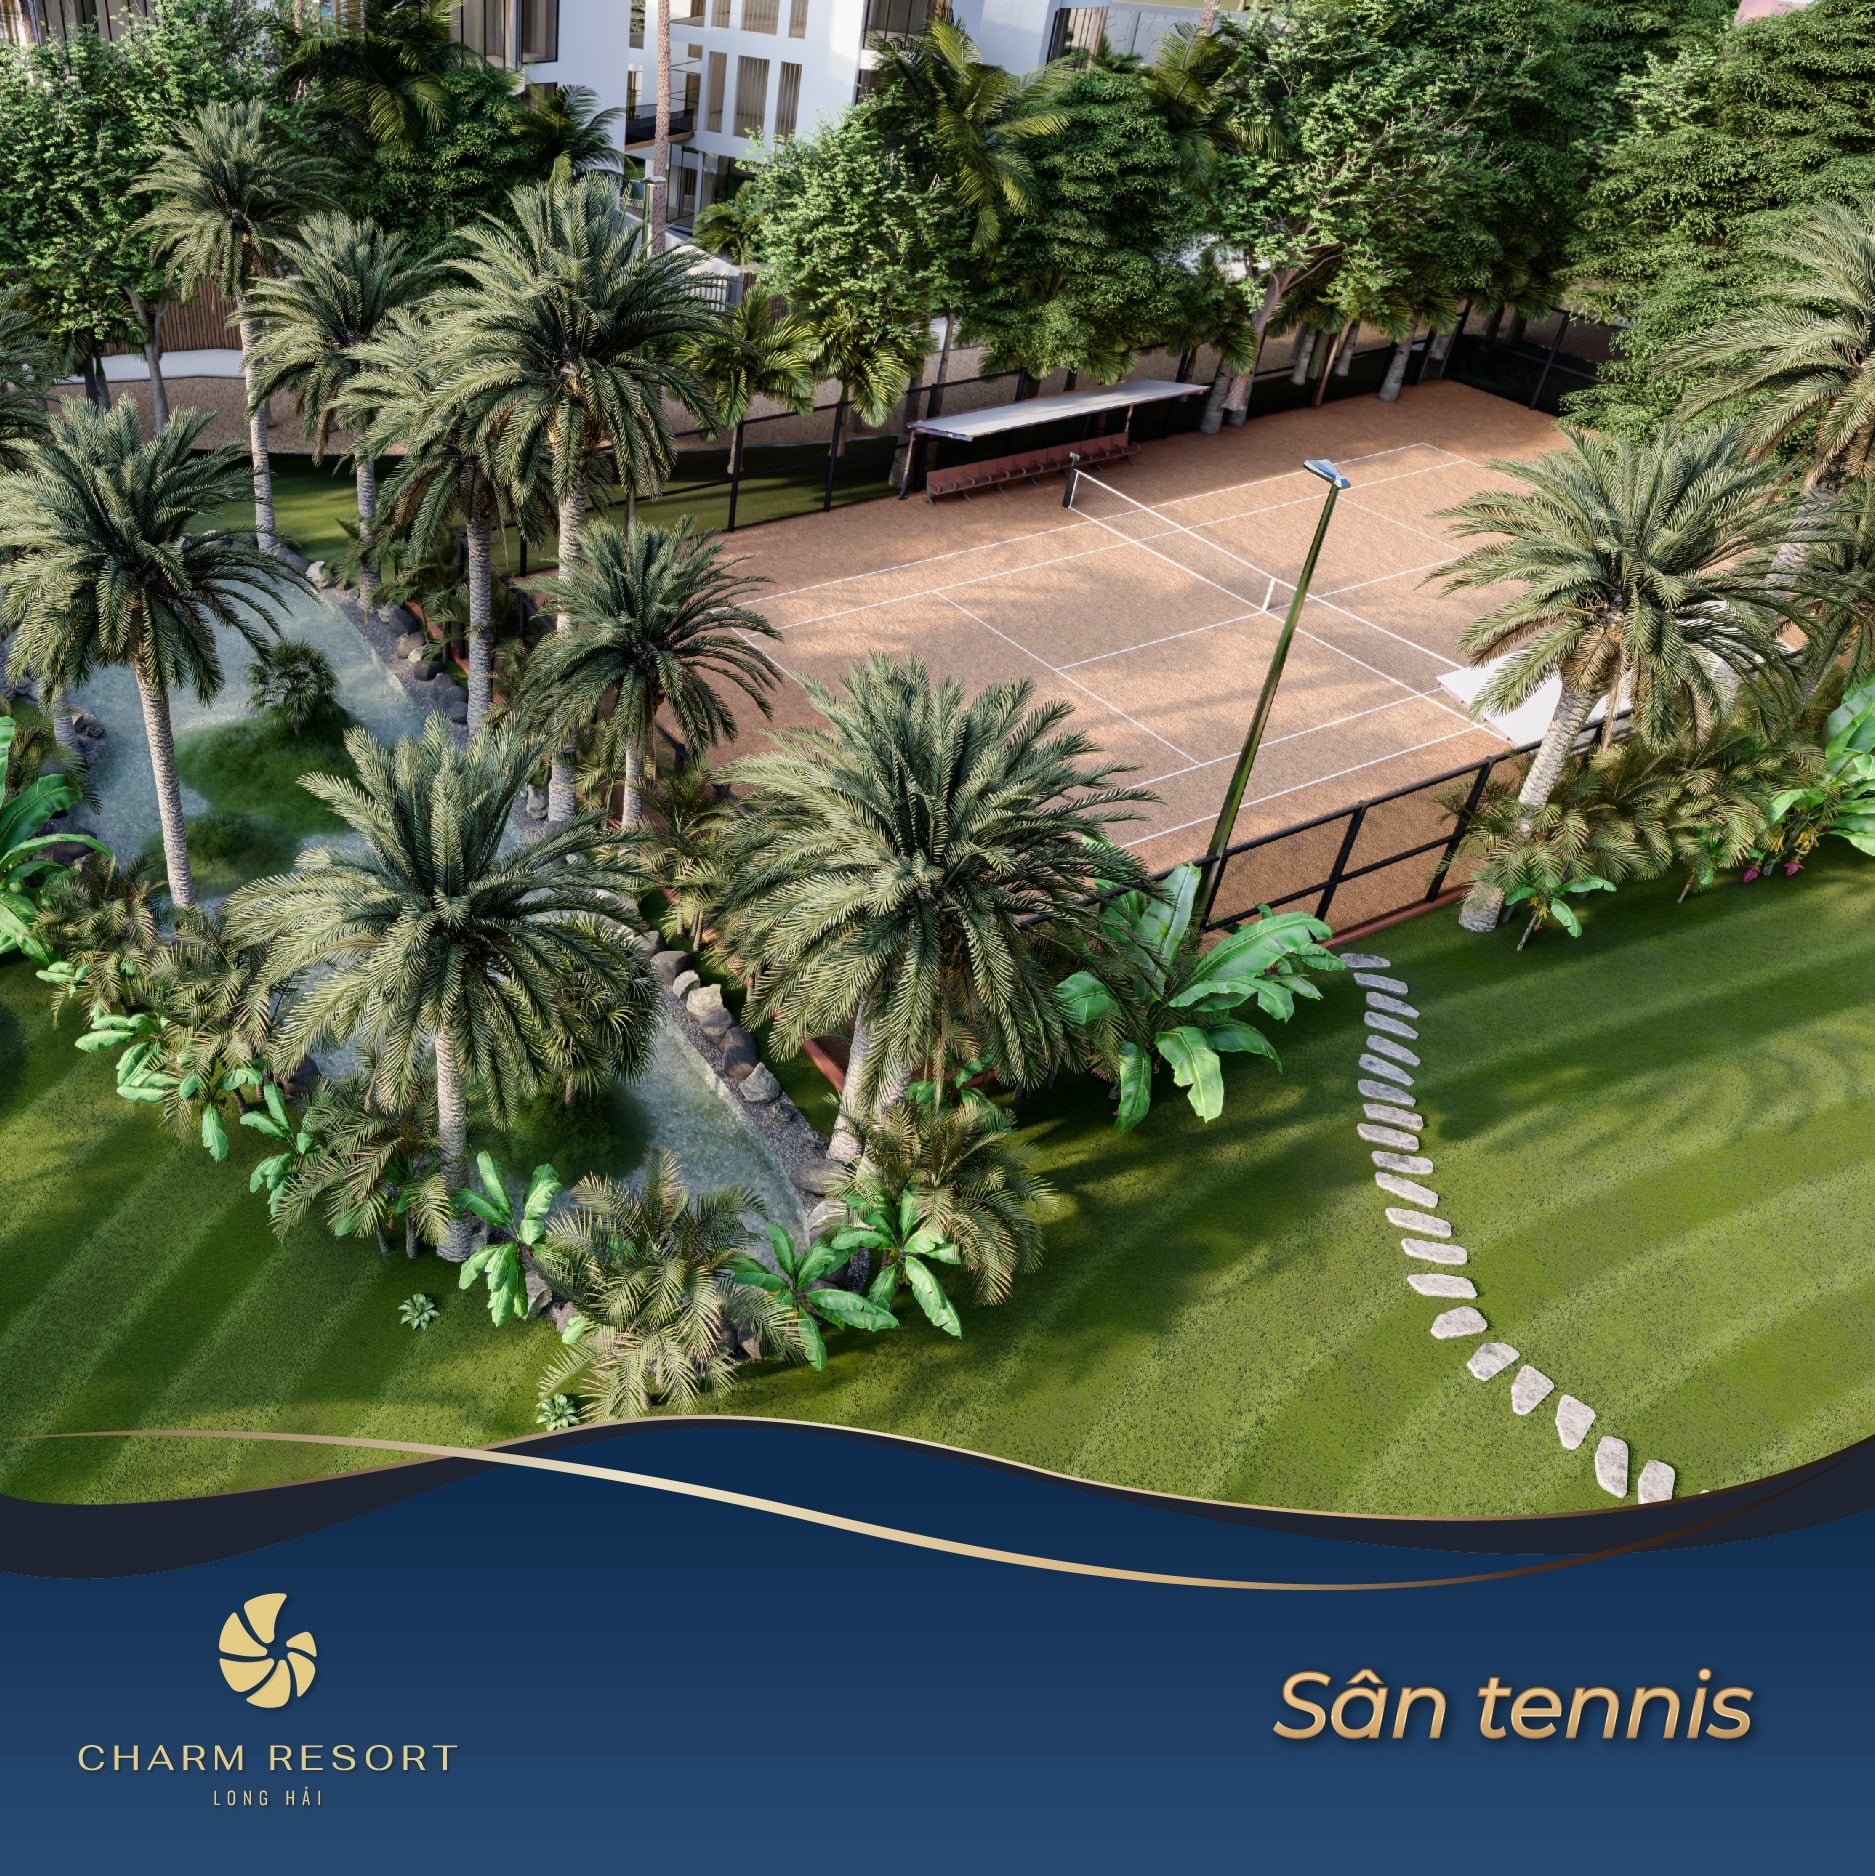 san-tennis-du-an-charm-resort-long-hai